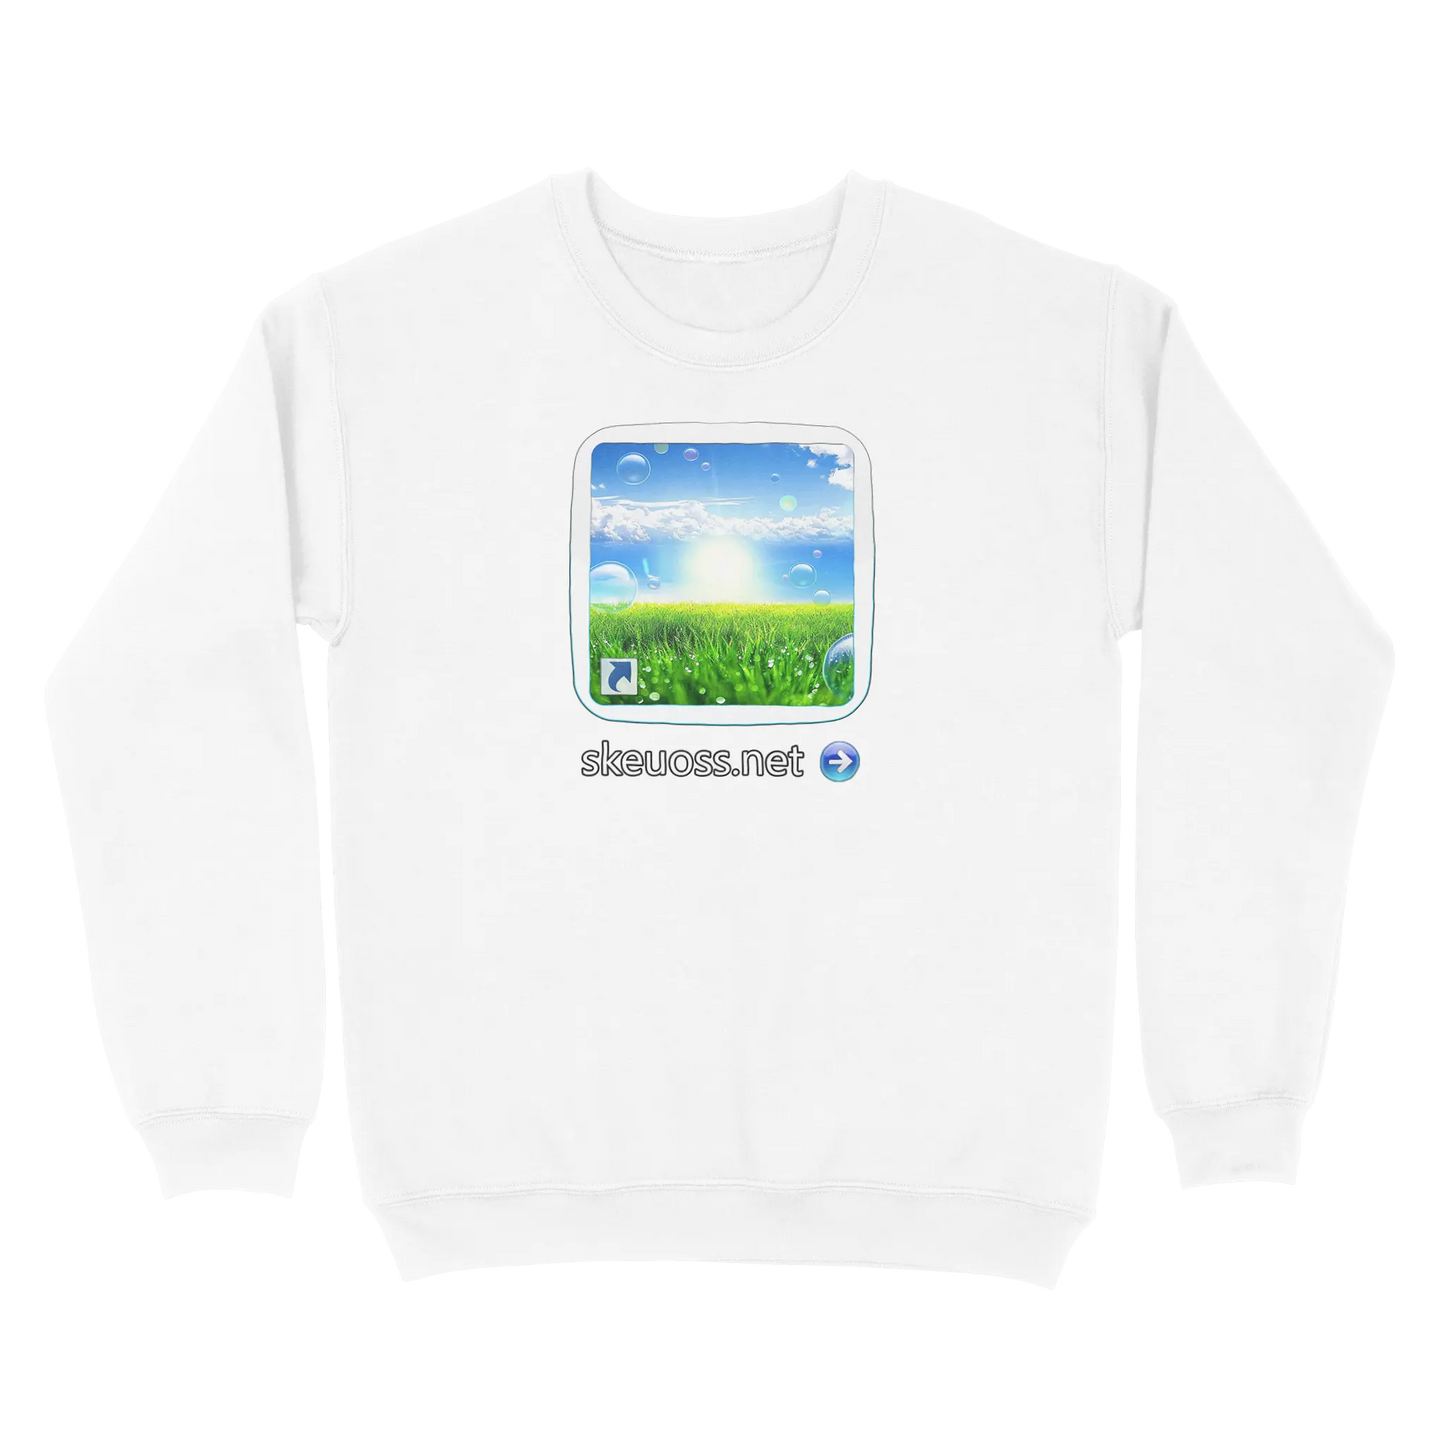 Frutiger Aero Sweatshirt - User Login Collection - User 279